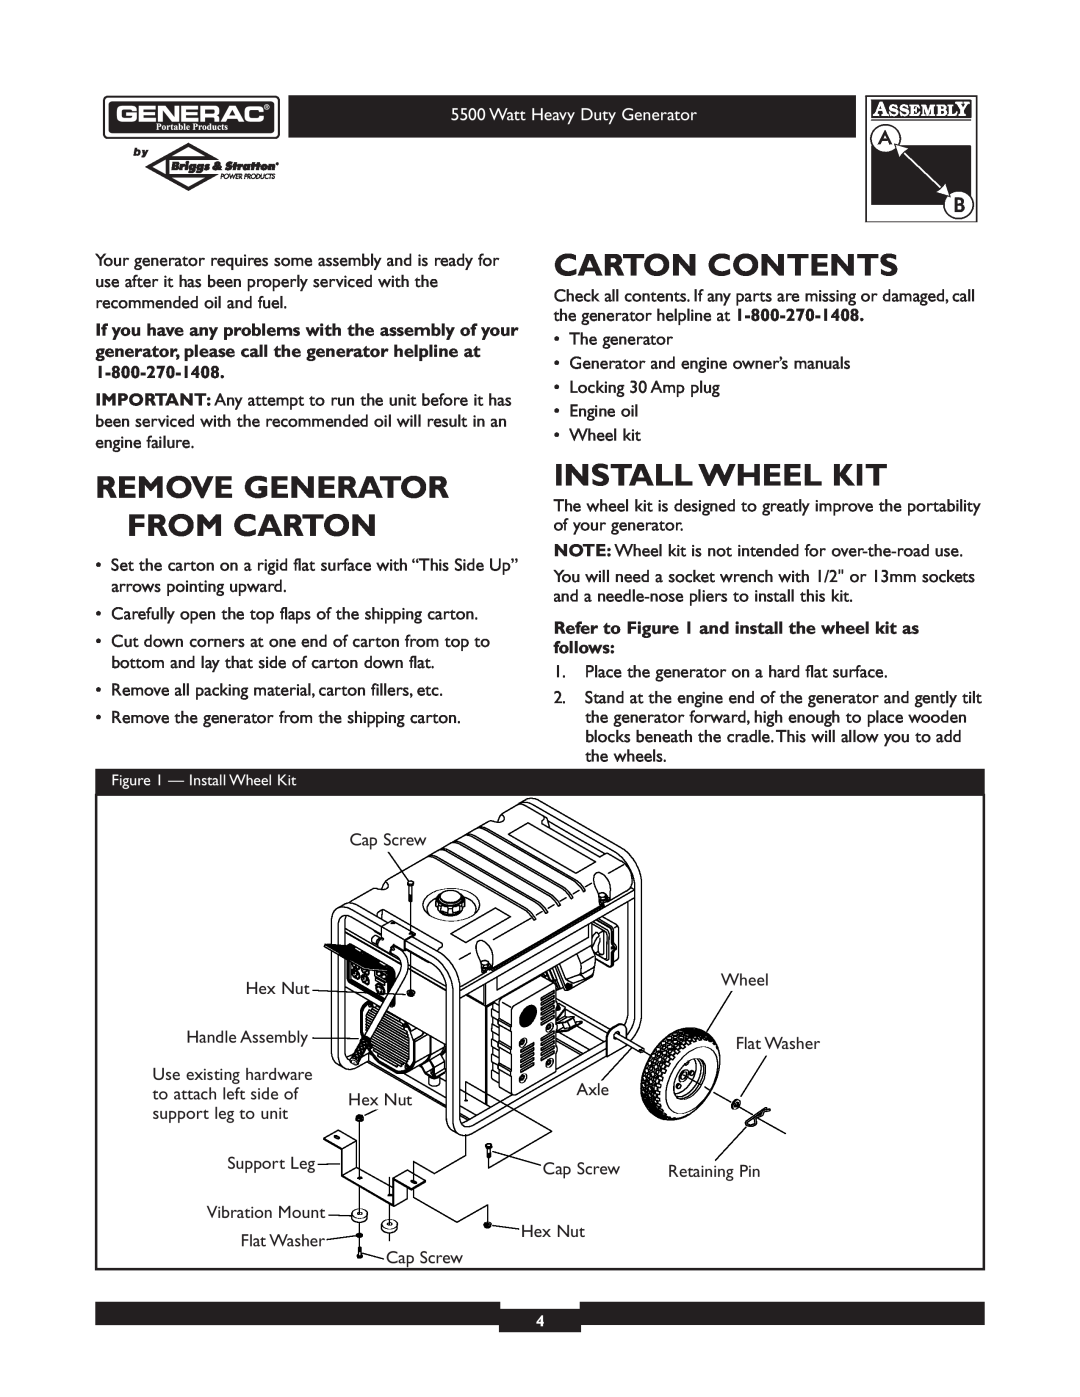 Generac 1654-0 owner manual Carton Contents, Remove Generator From Carton, Install Wheel Kit 